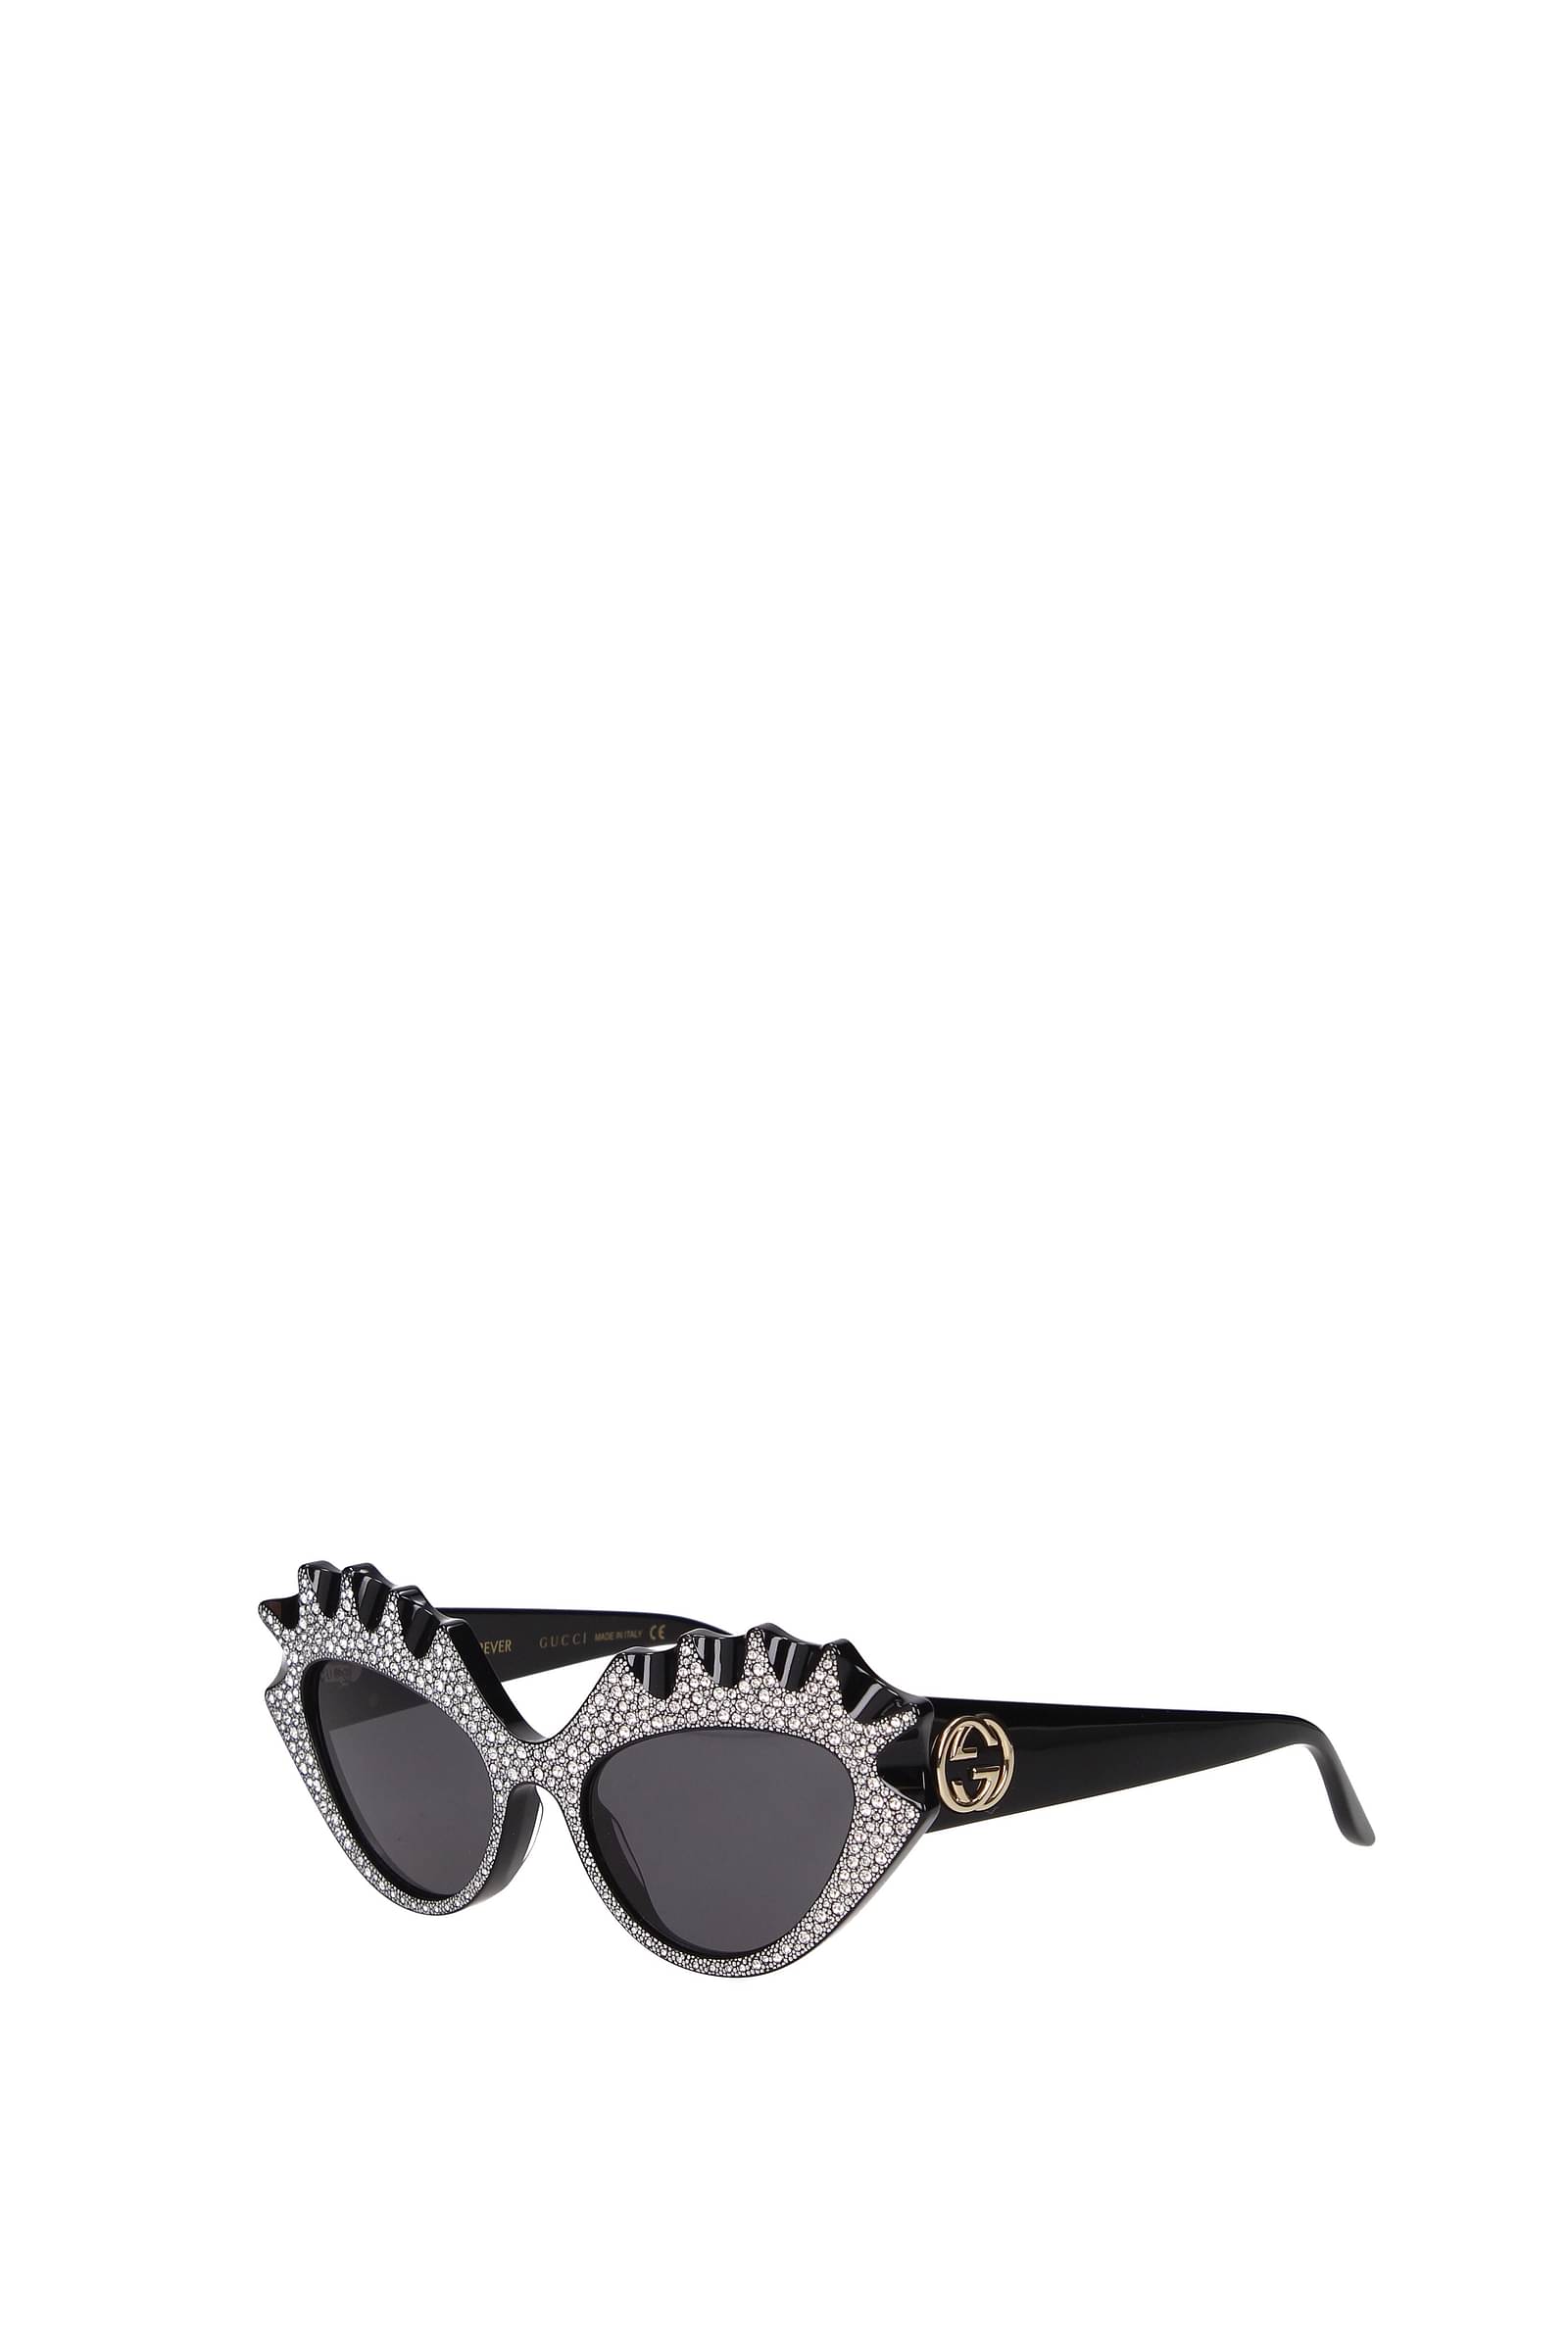 Gucci Grey Gradient Square Ladies Sunglasses GG0328S 001 53 - Walmart.com